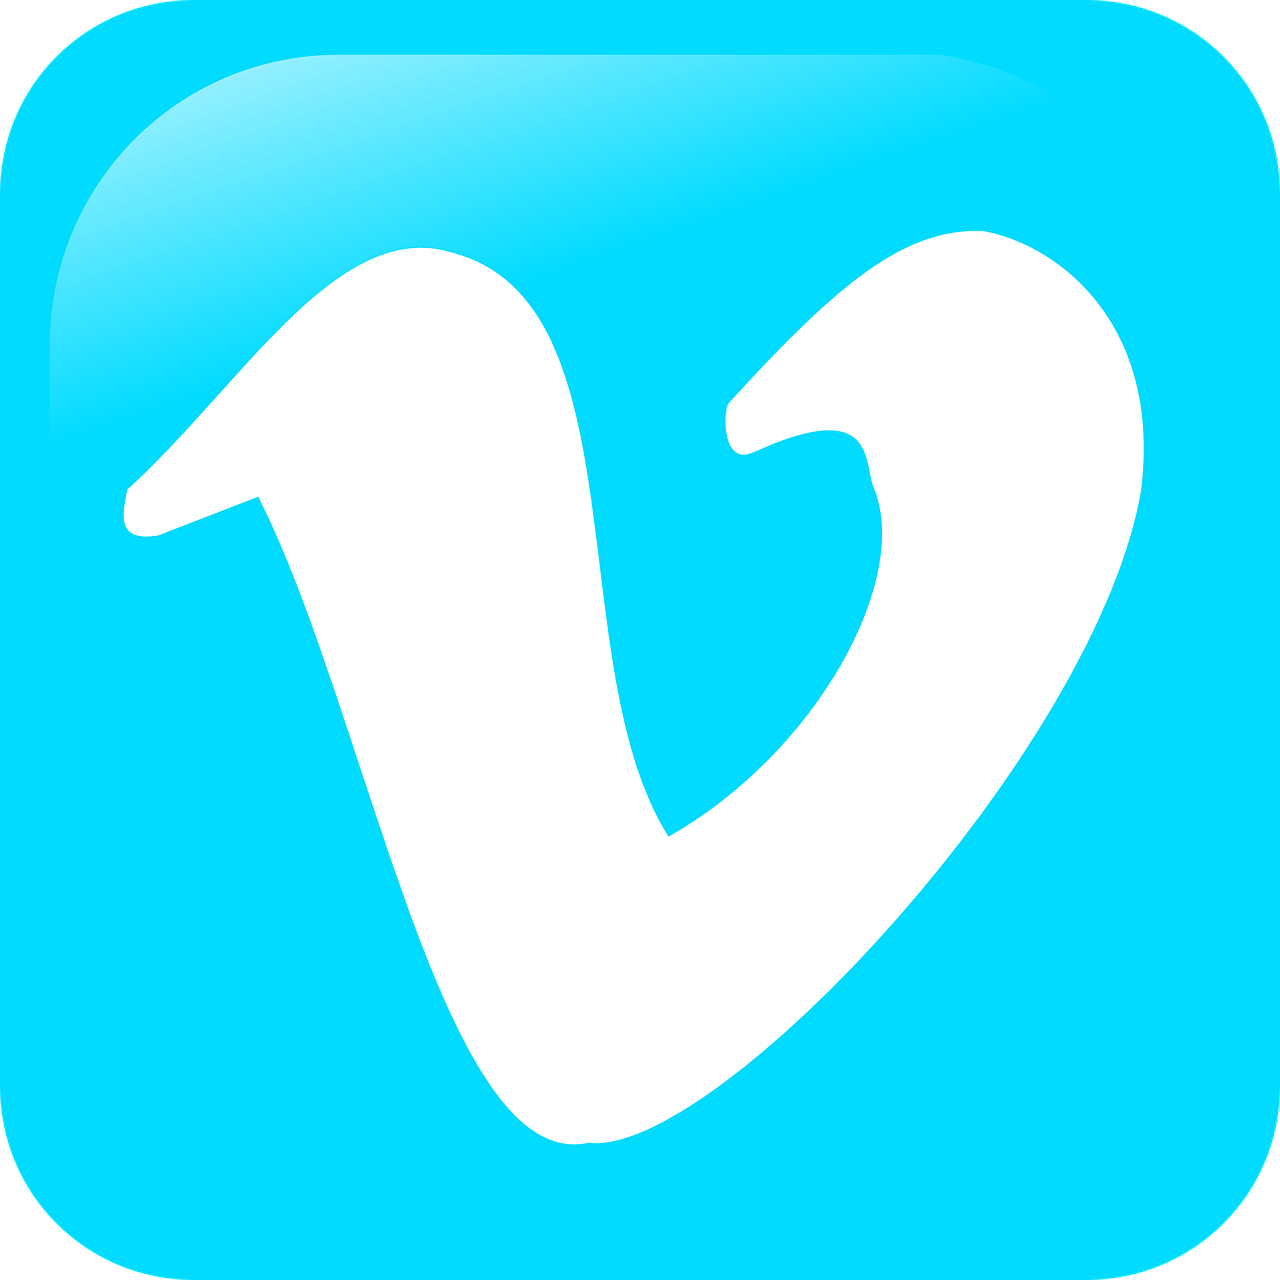 vimeo favicon logo free photo